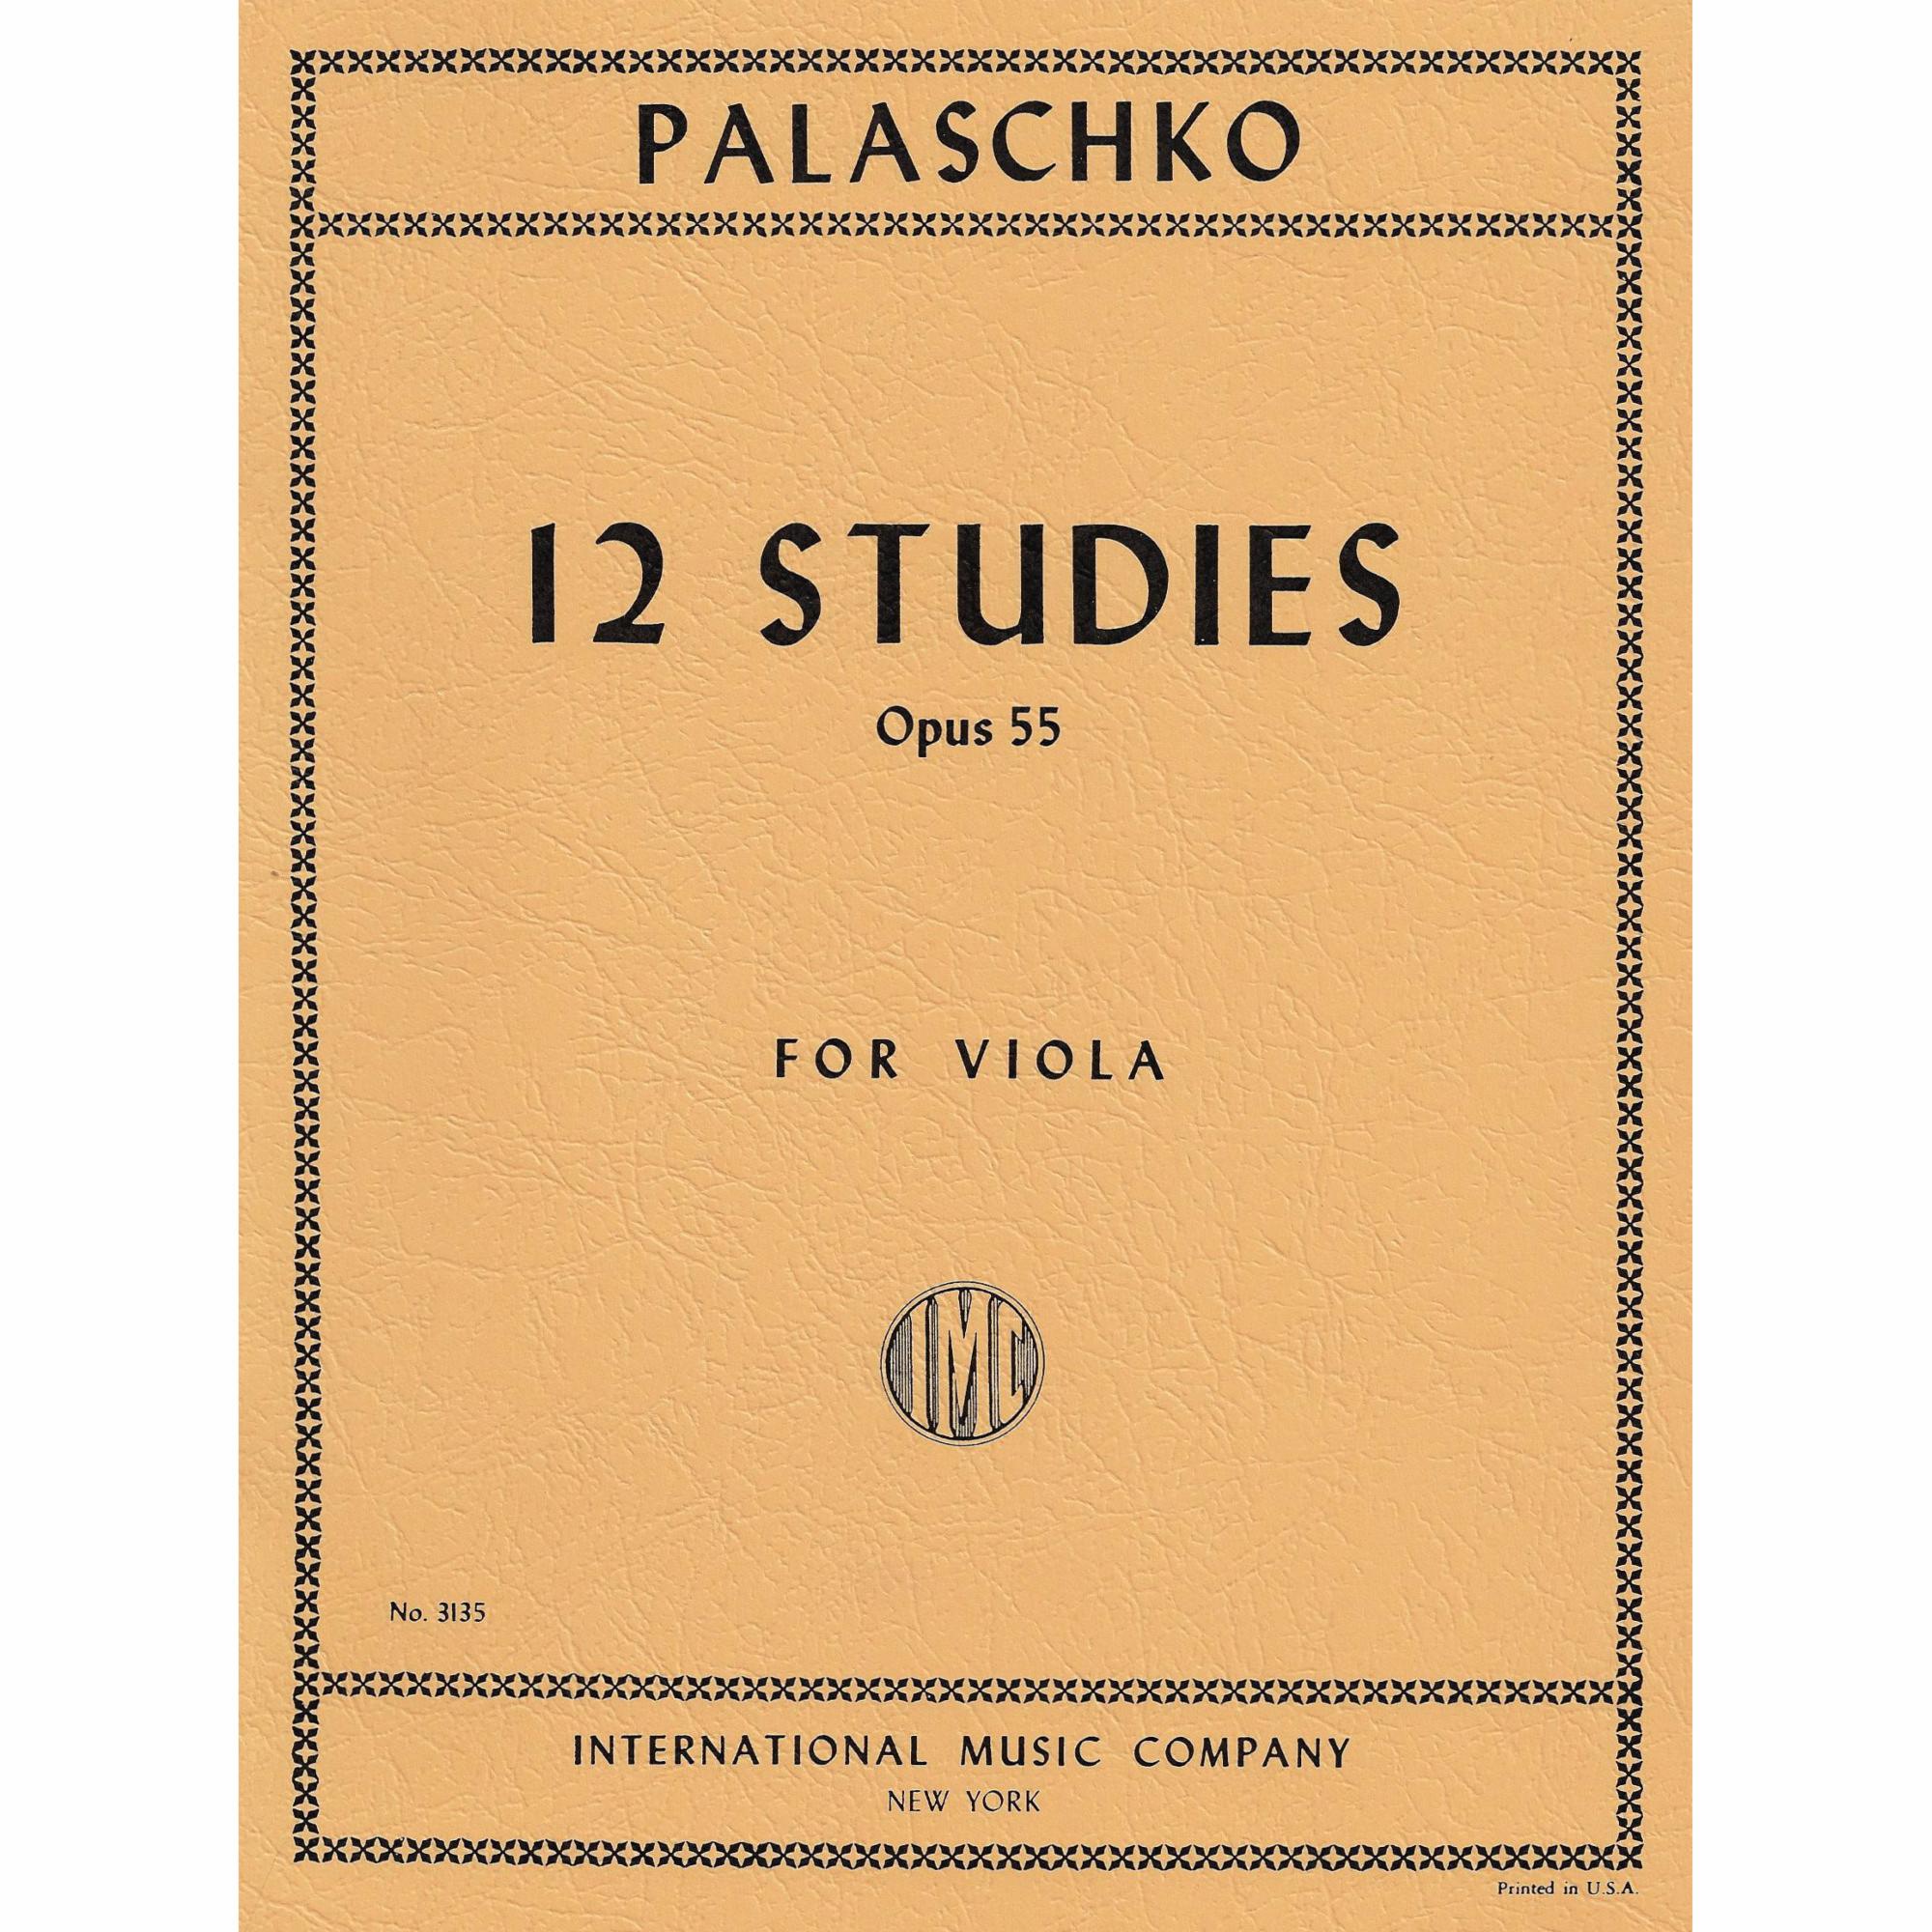 Palaschko -- 12 Studies, Op. 55 for Viola